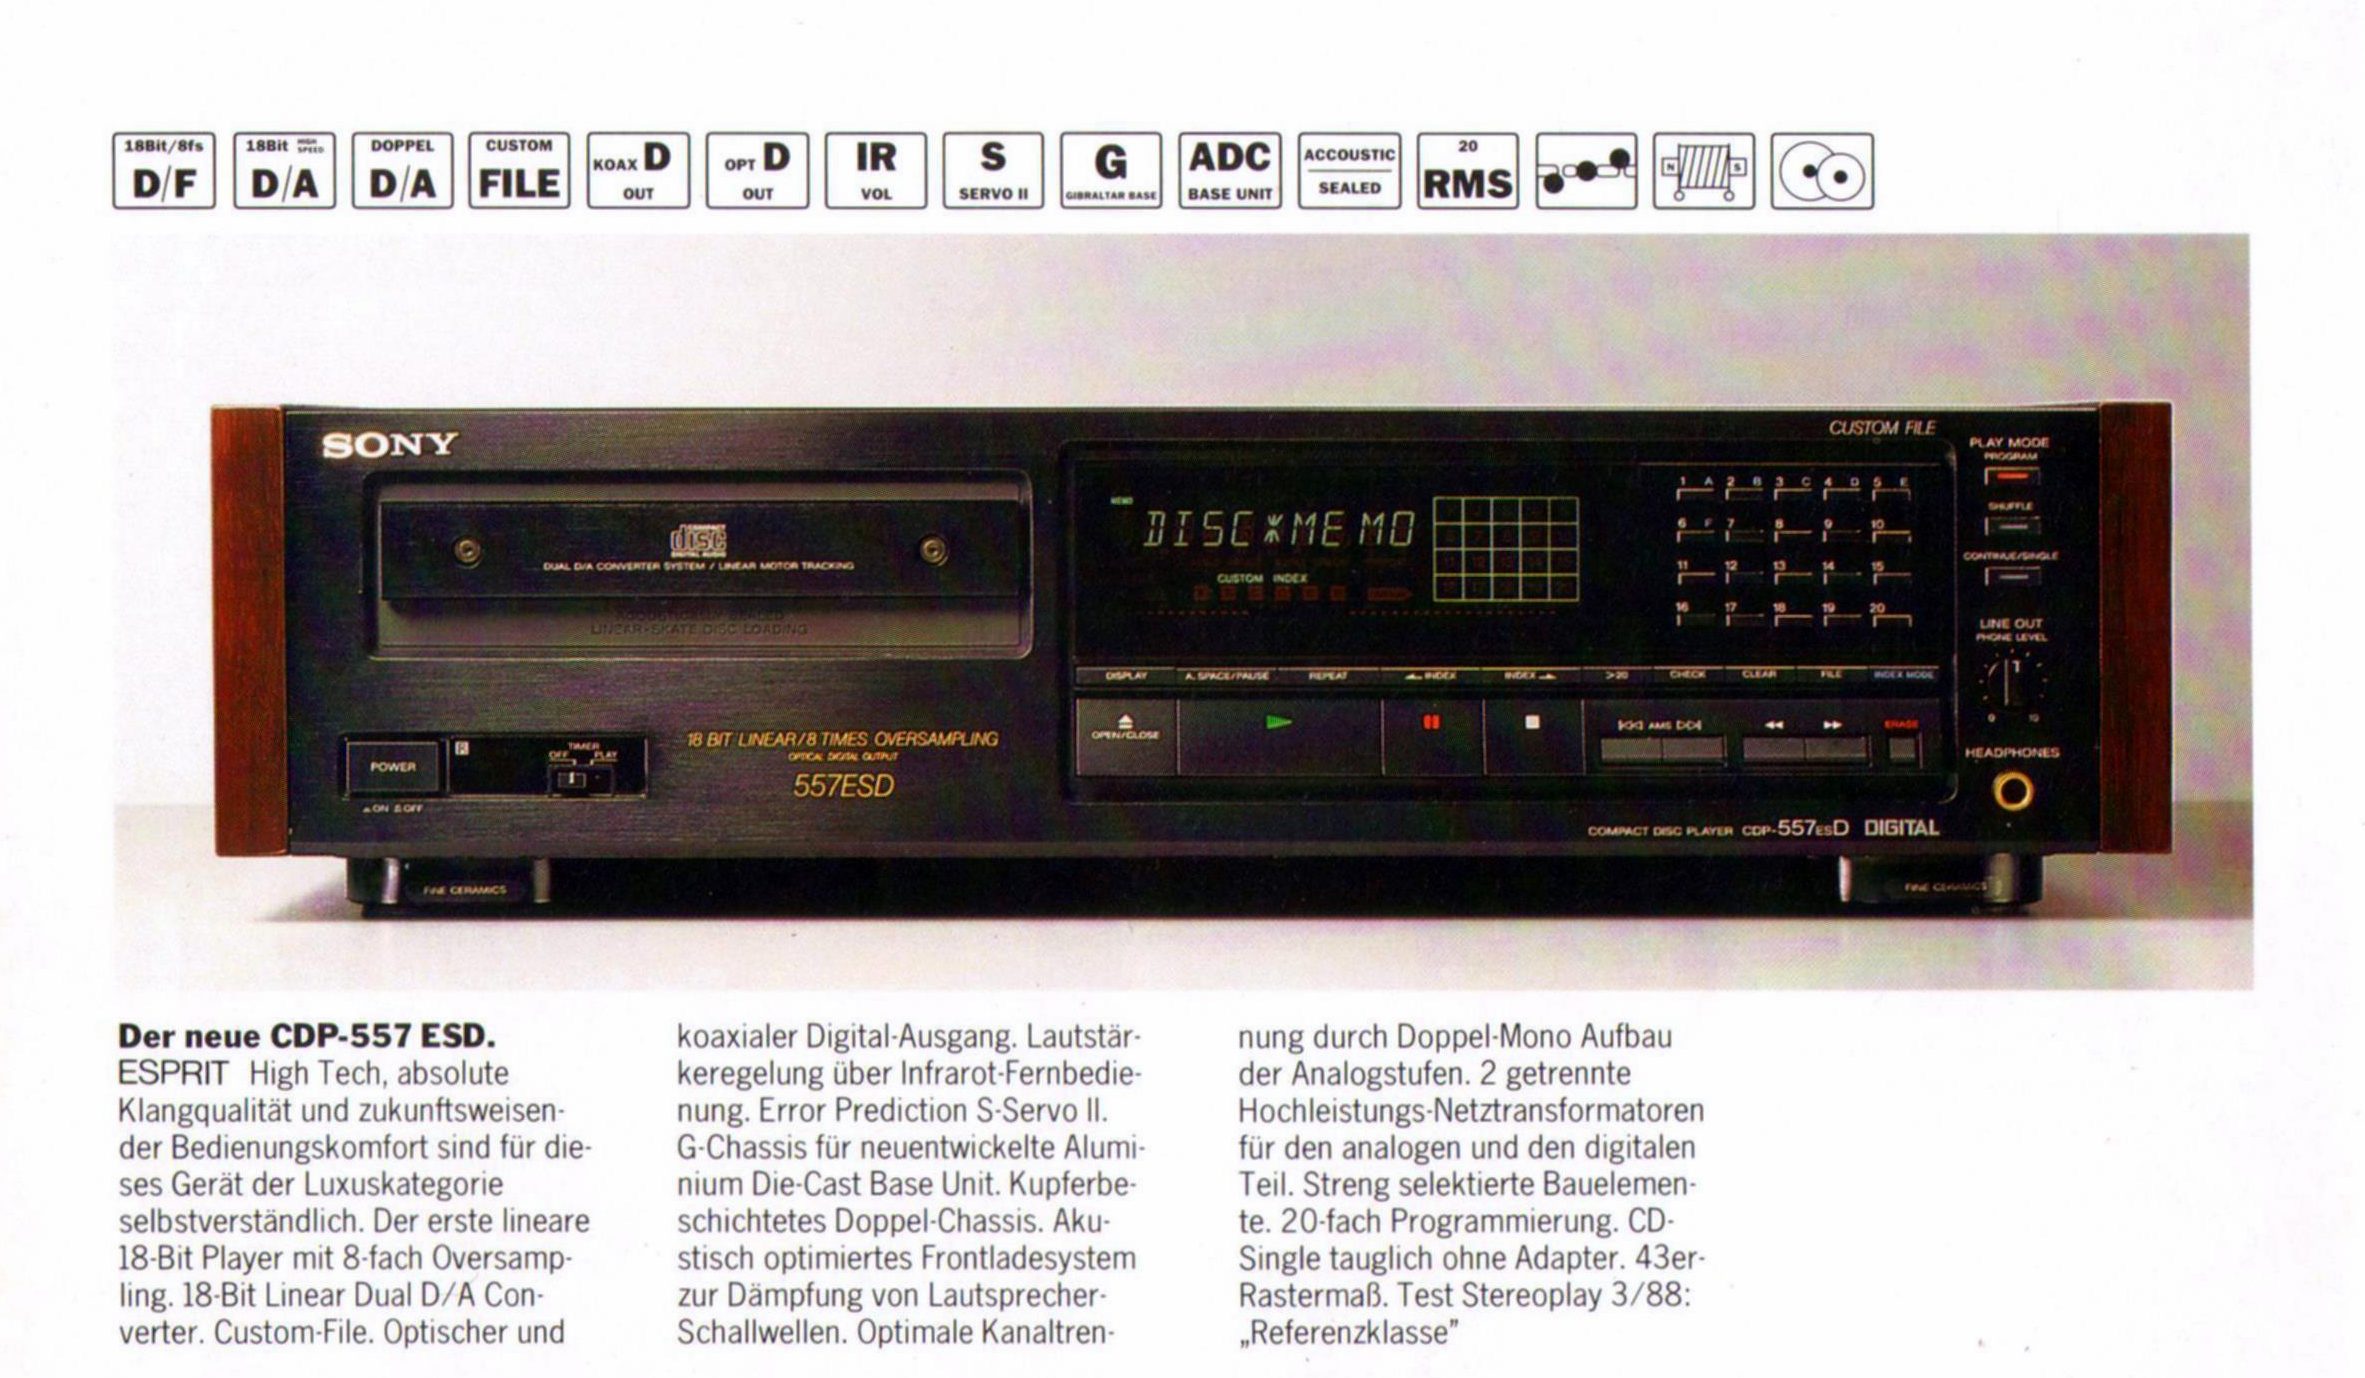 Sony CDP-557 ESD-Prospekt-1988.jpg